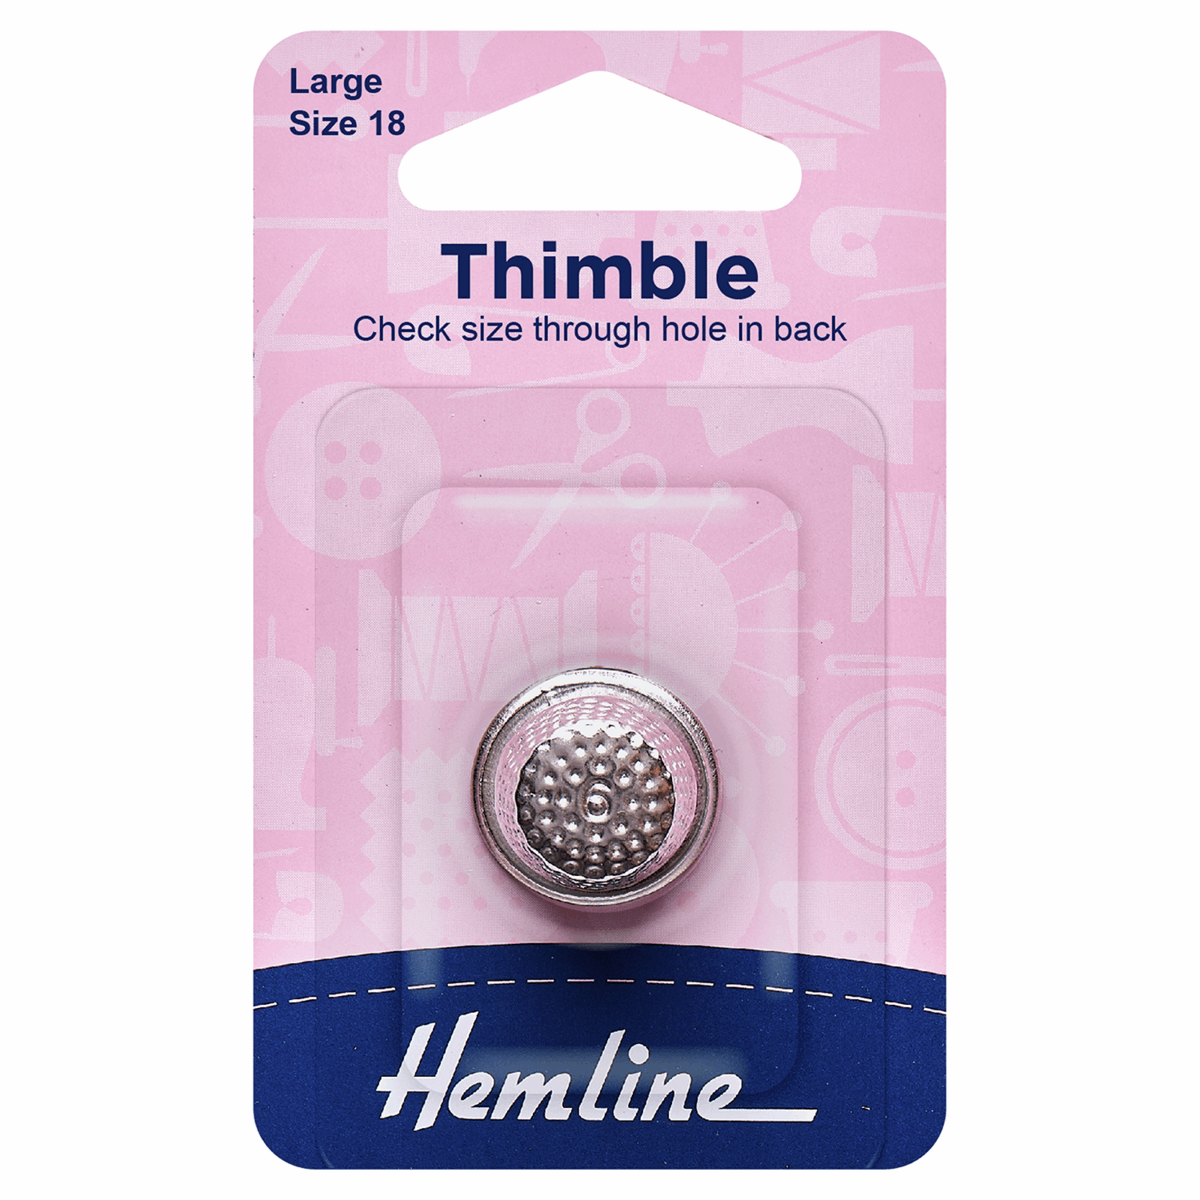 Hemline Metal Thimble: Size 18 - Large